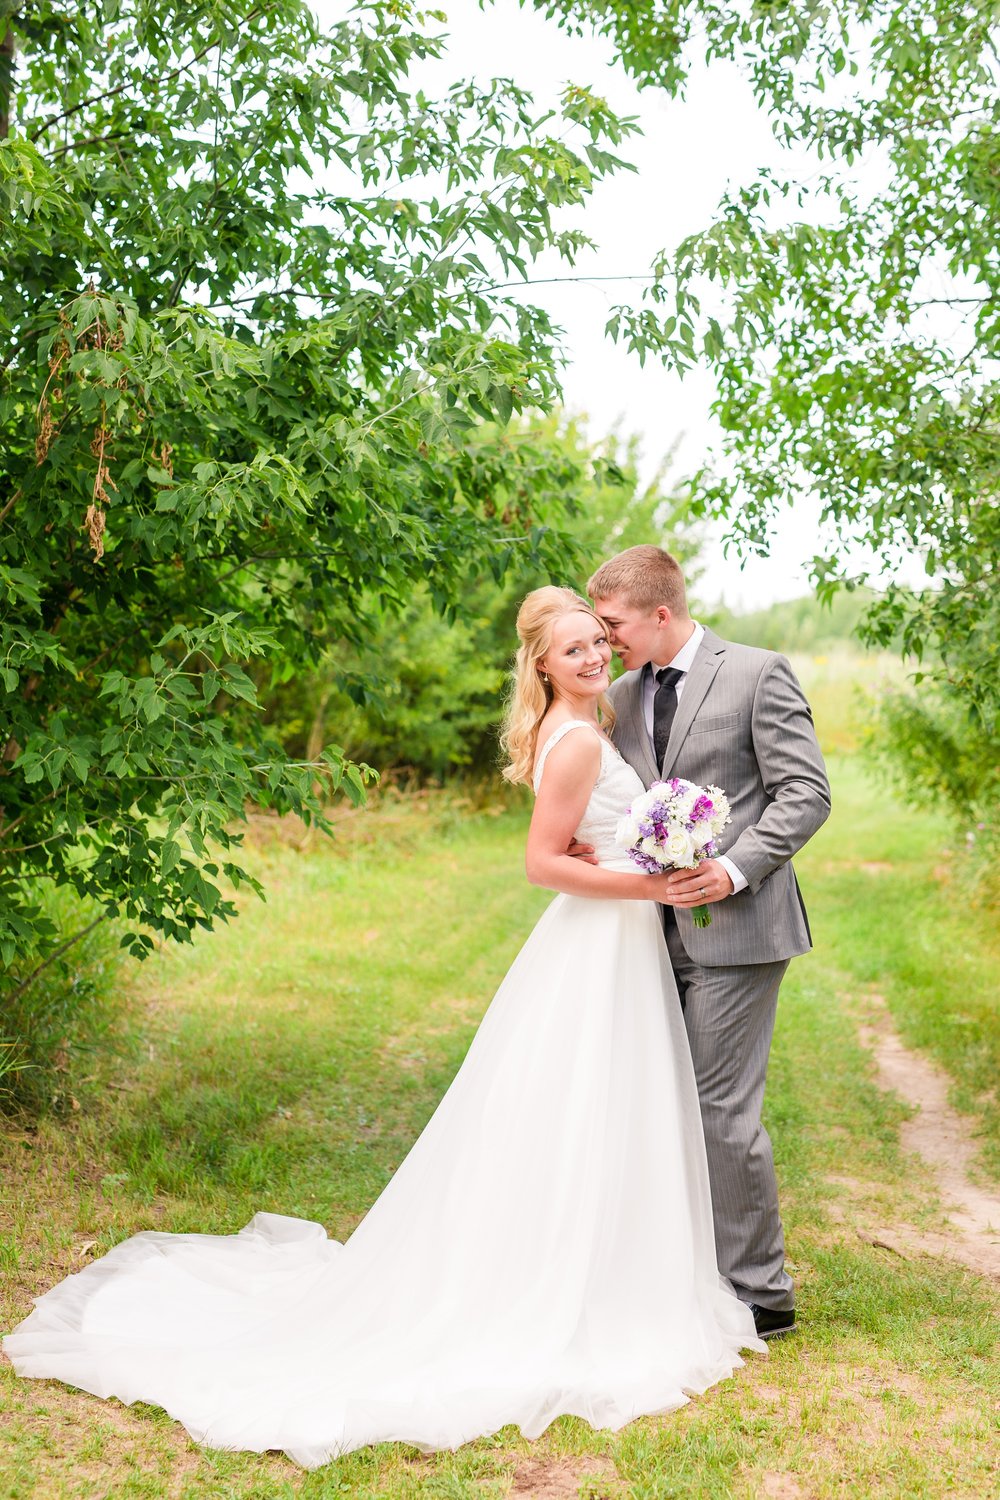 Backyard Frazee, MN Wedding with Frazee Event Center Reception by Amber Langerud | Ellie & Erik